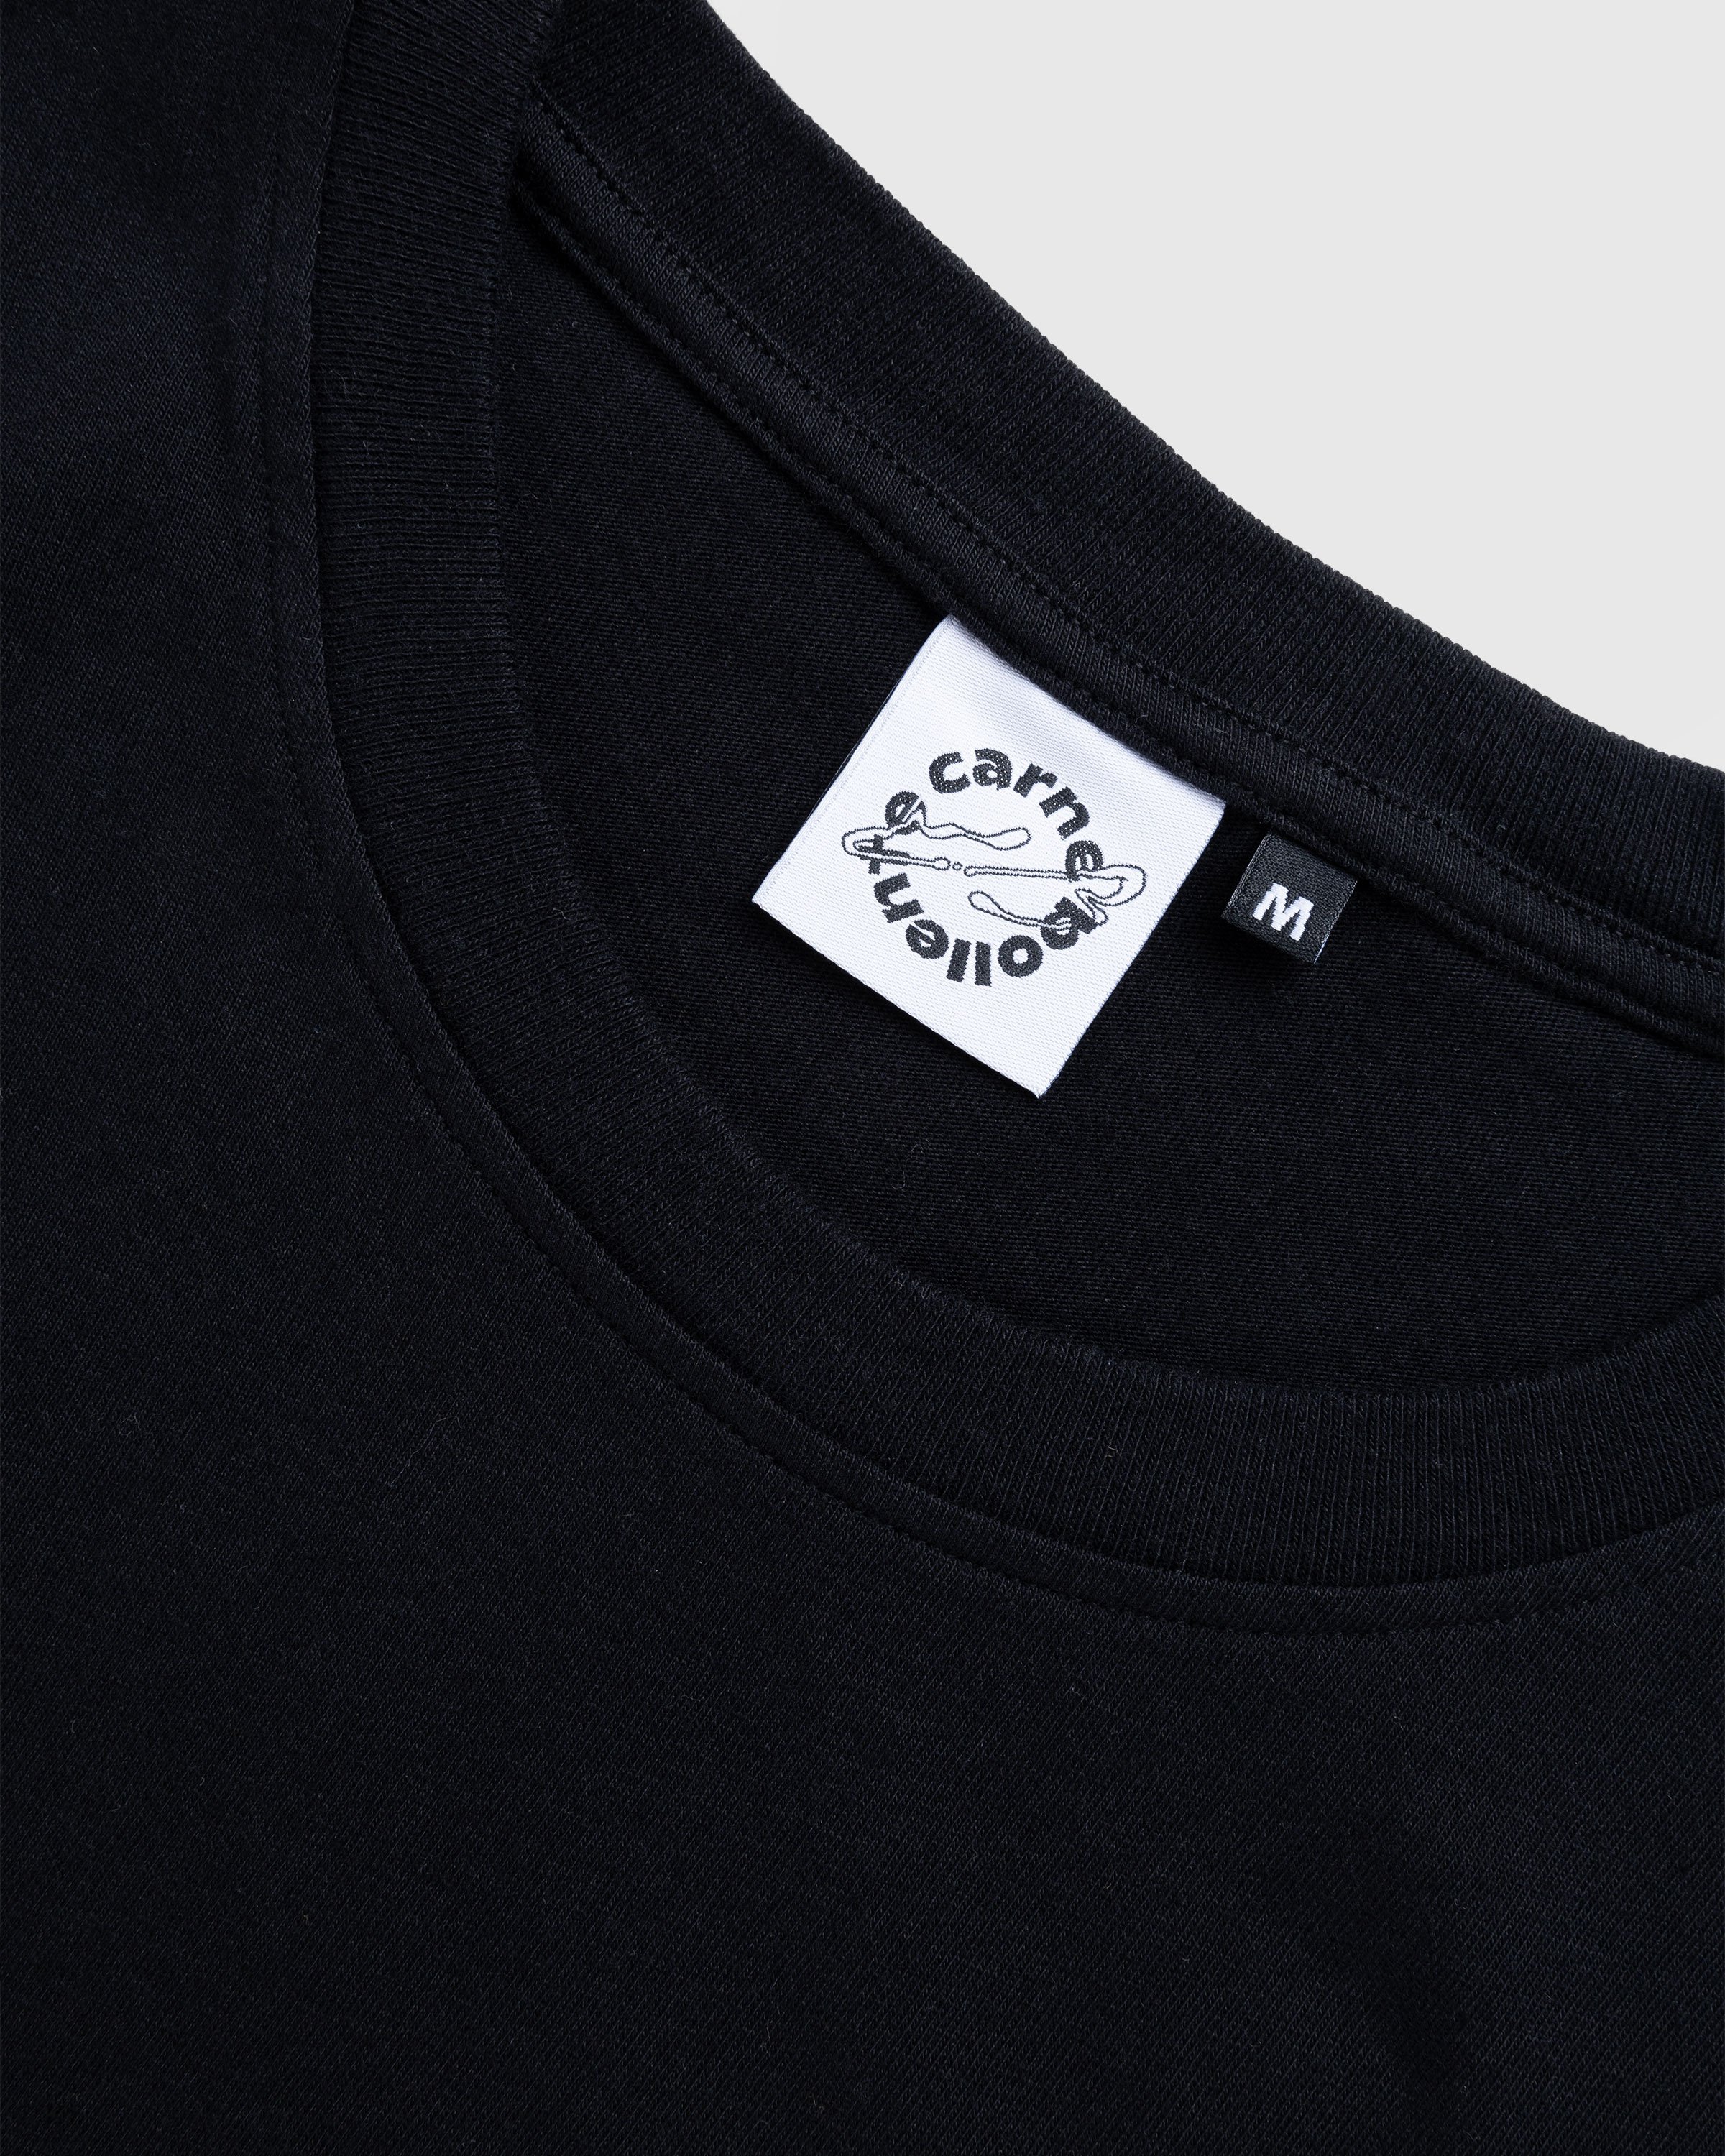 Carne Bollente - Middle Edging T-Shirt Black - Clothing - Black - Image 3